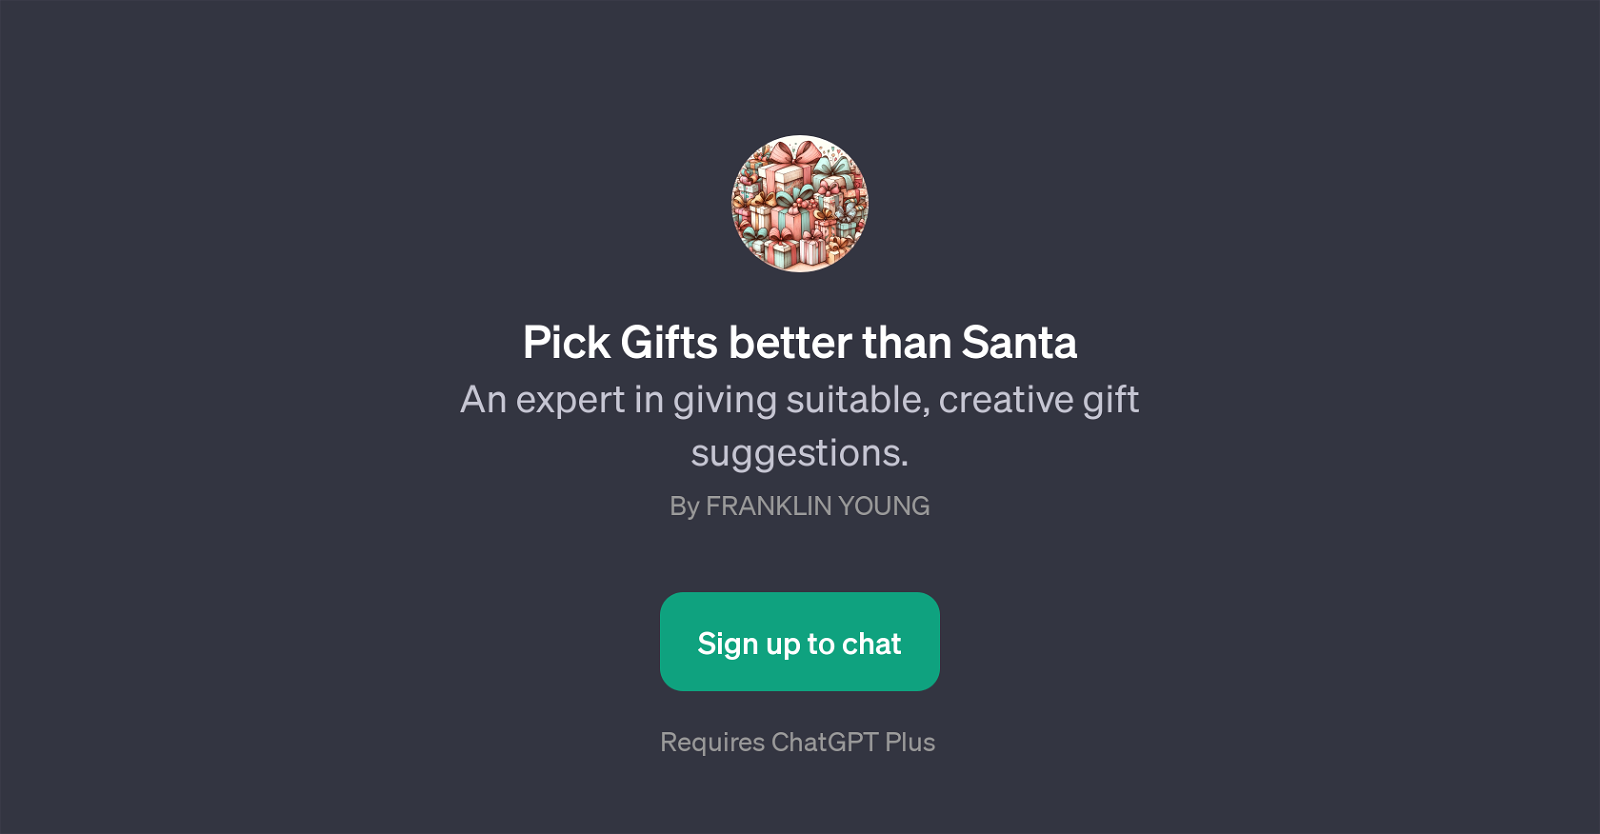 Pick Gifts better than Santa website